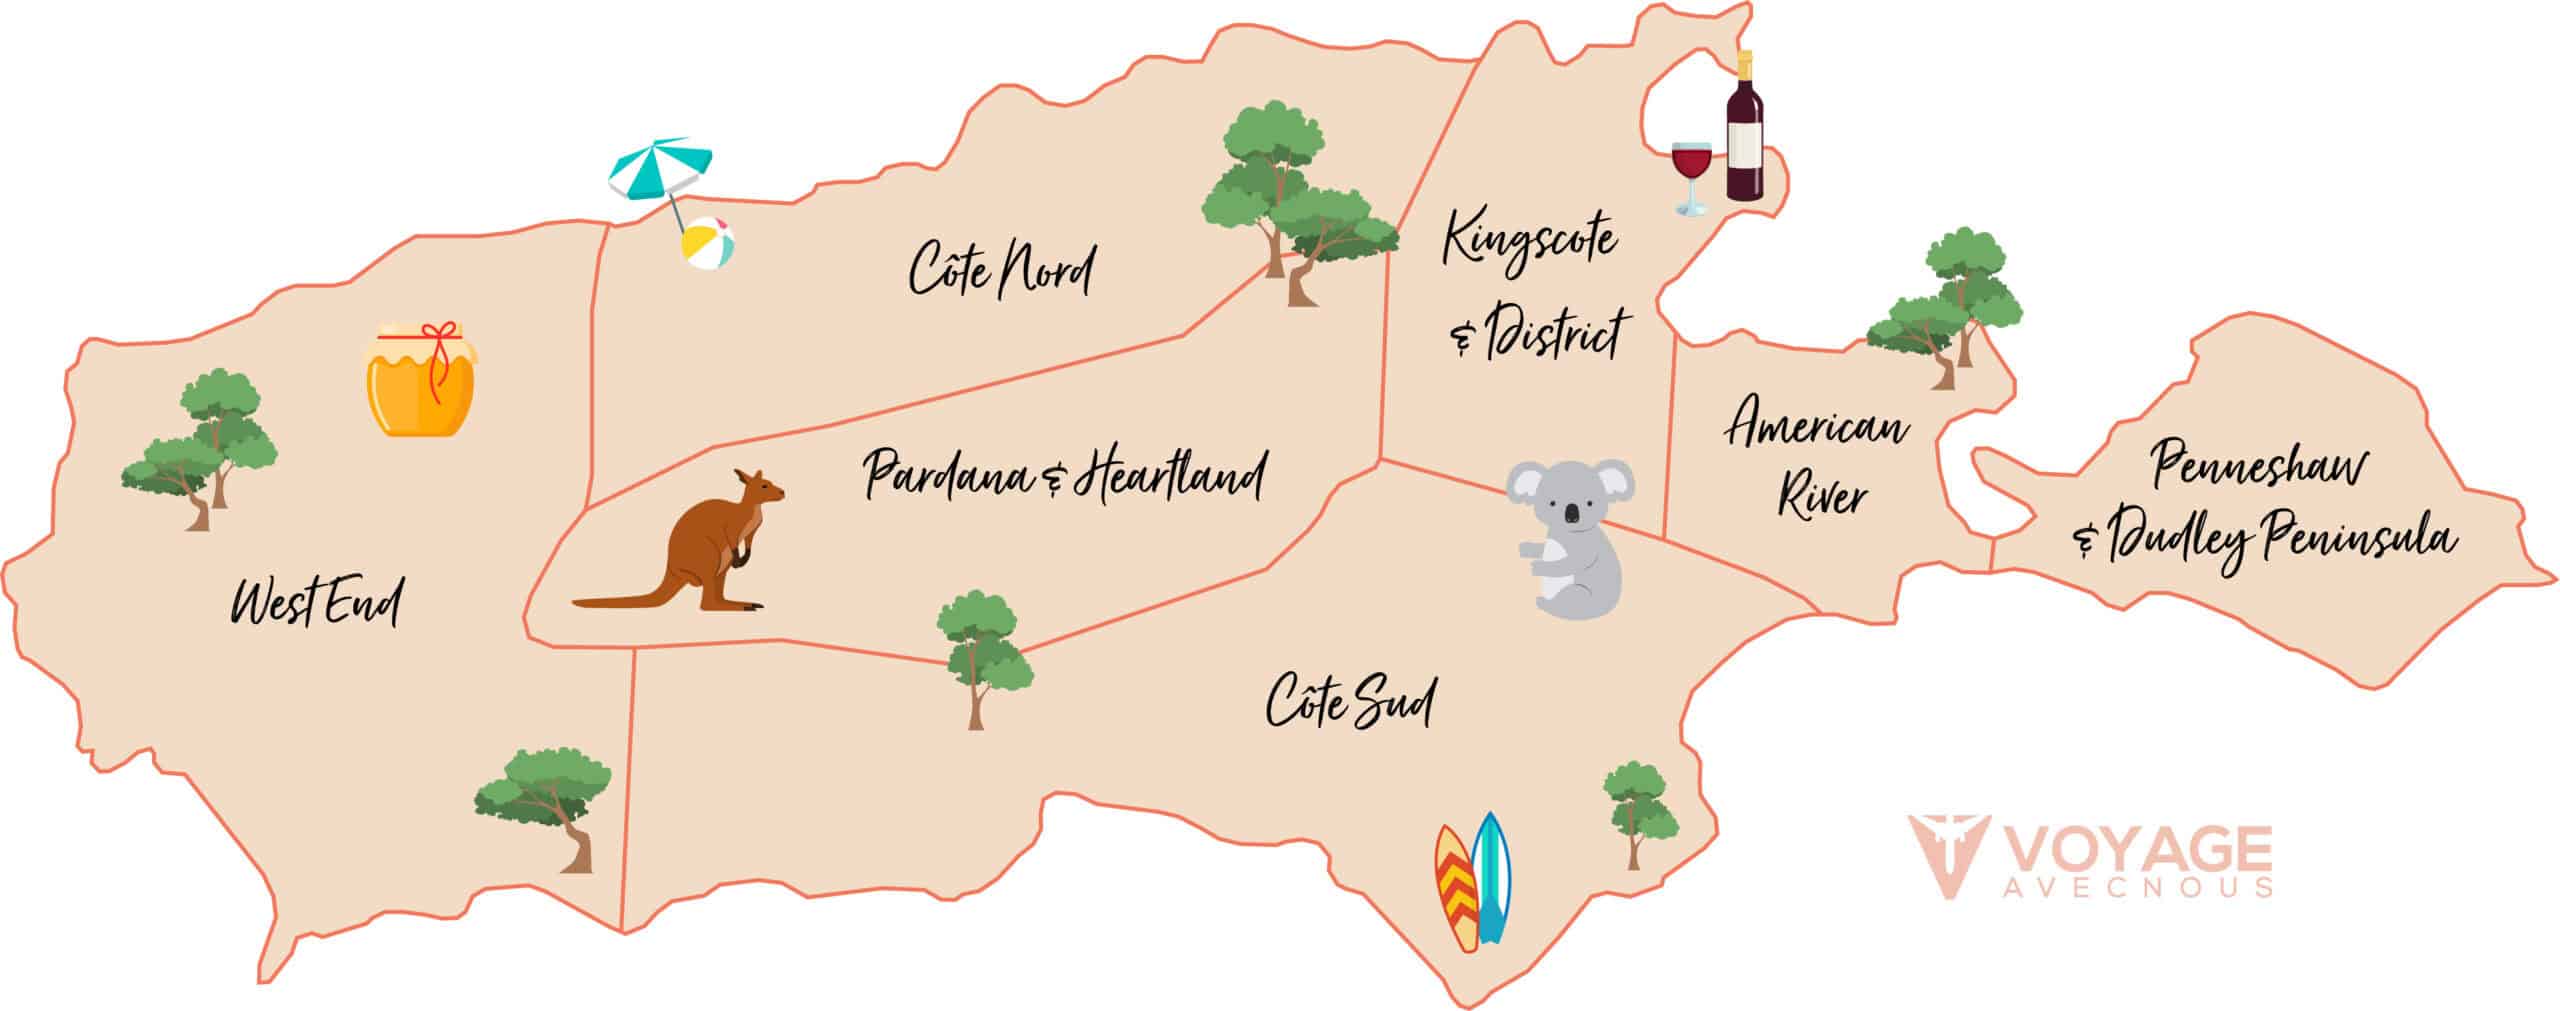 7 regions de kangaroo island